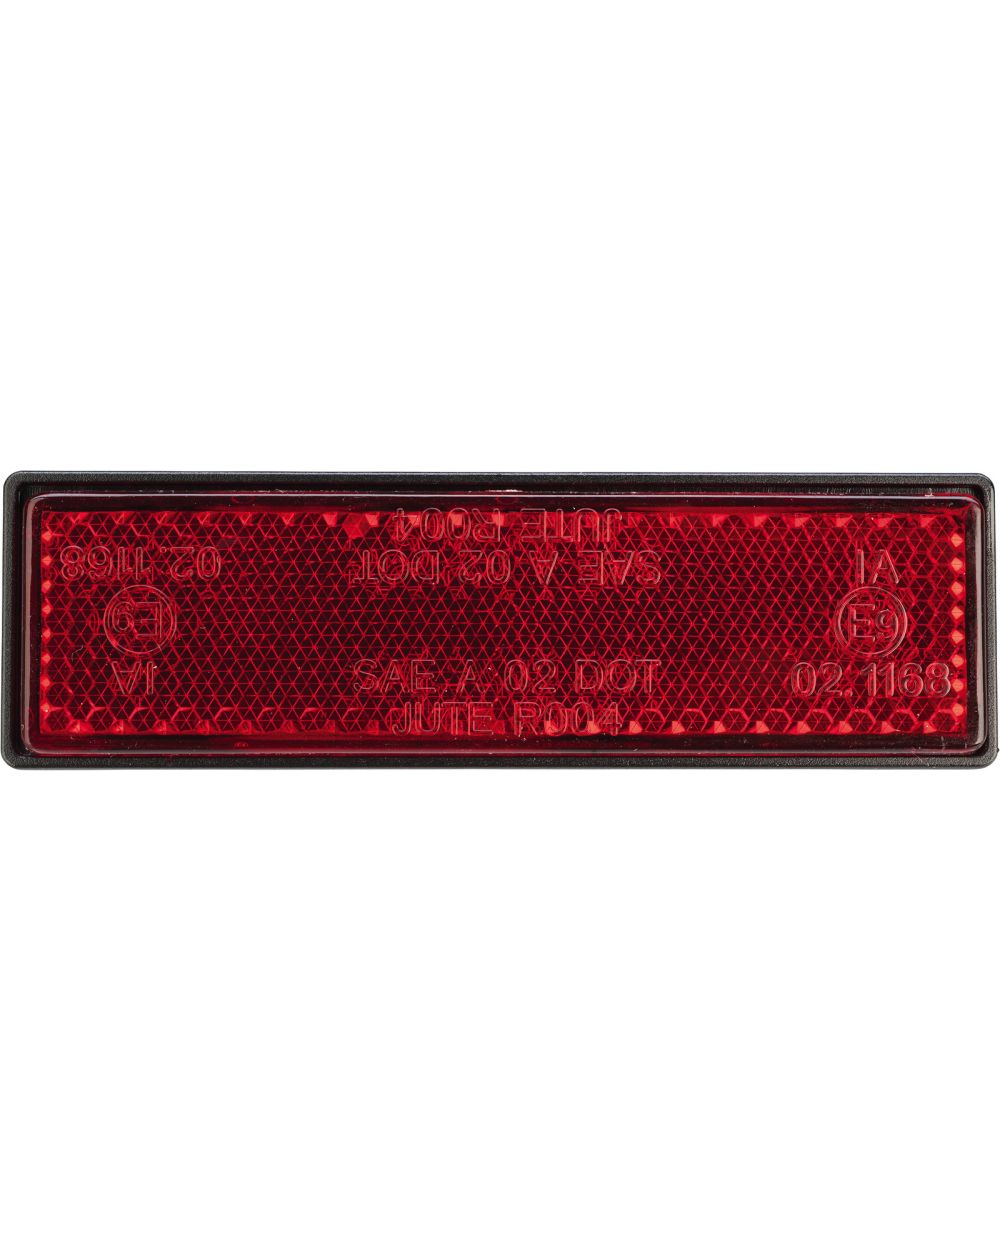 Reflektor Stripe rechteckig rot 102,5 x 15,3 x 7mm, E-geprüft, selb